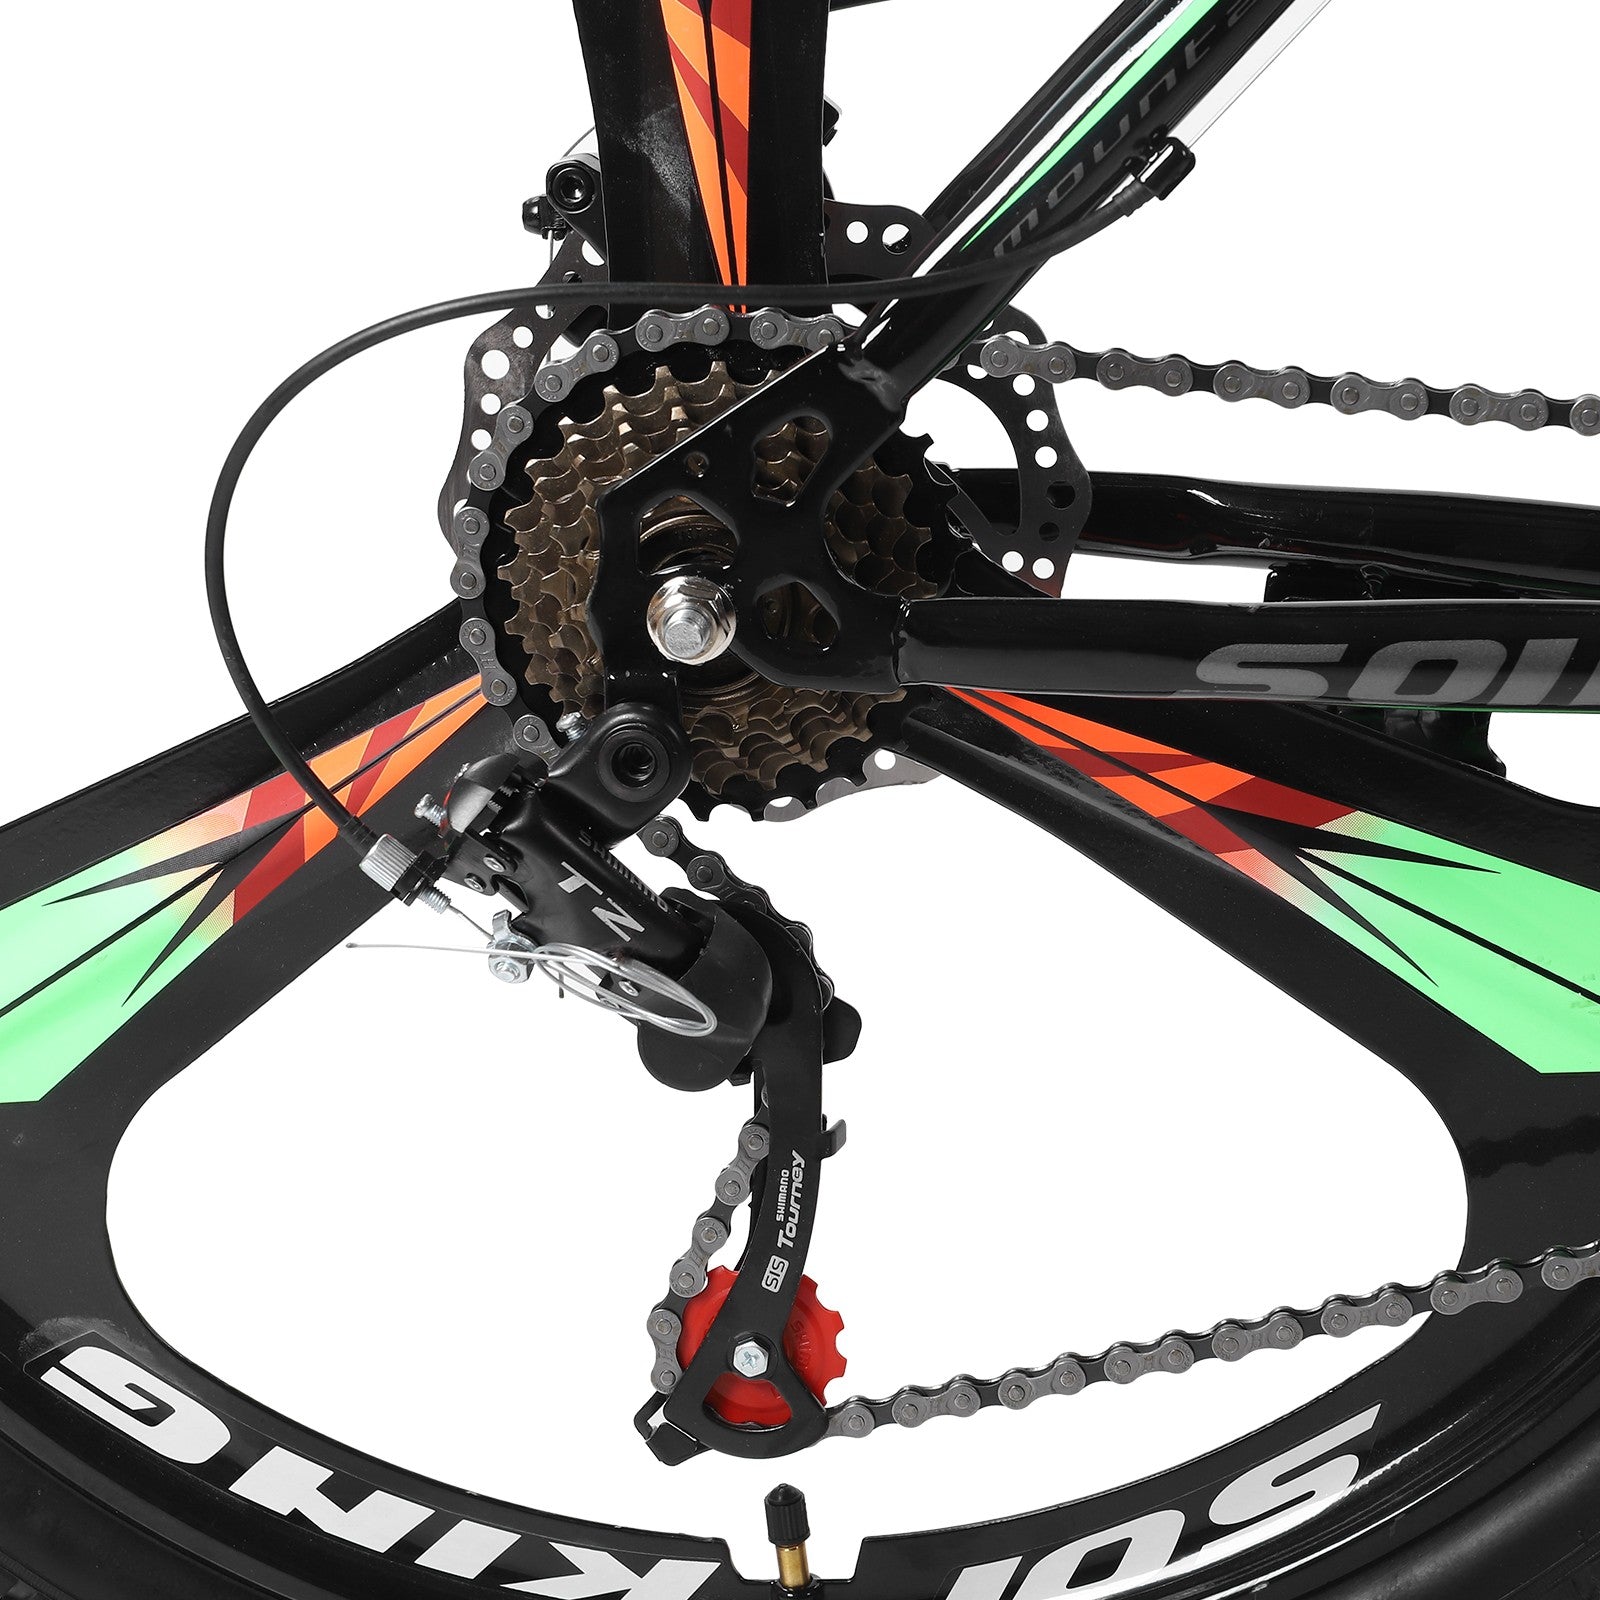 26 Inchs 21 Speed 3 Knife Wheel Mountain Bike, Dual Suspension Bike, Multicolor